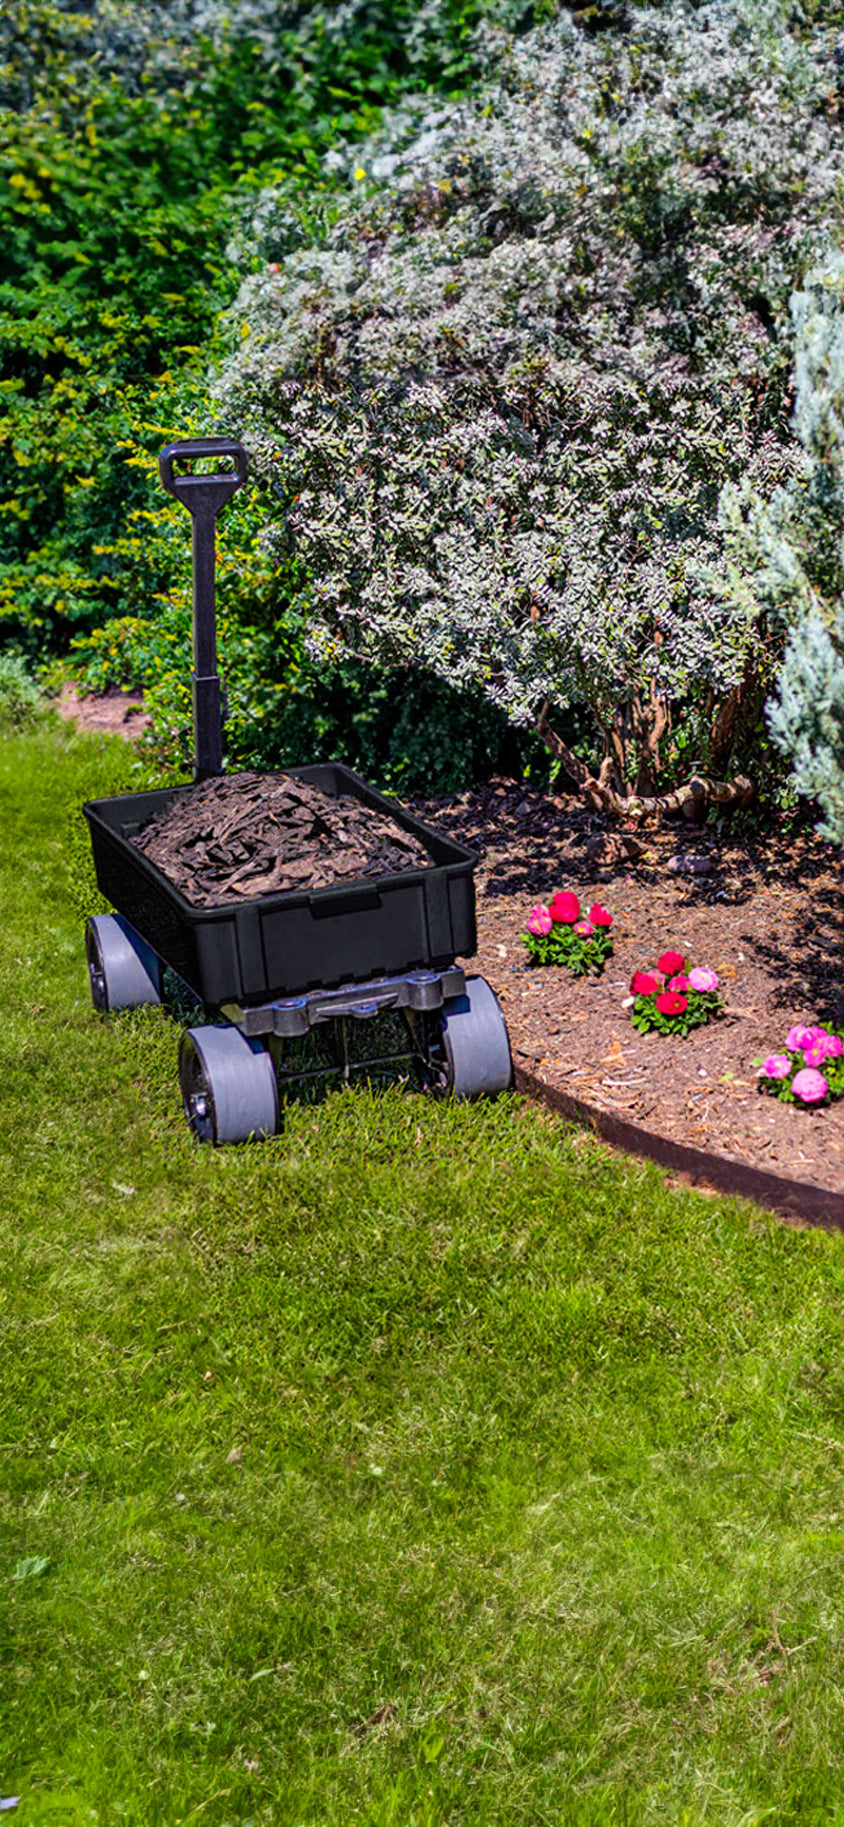 garden-cart-yard-cart-utility-dolly-made-usa-american-manufacturing-garden-double-decker-wagon-collapsible